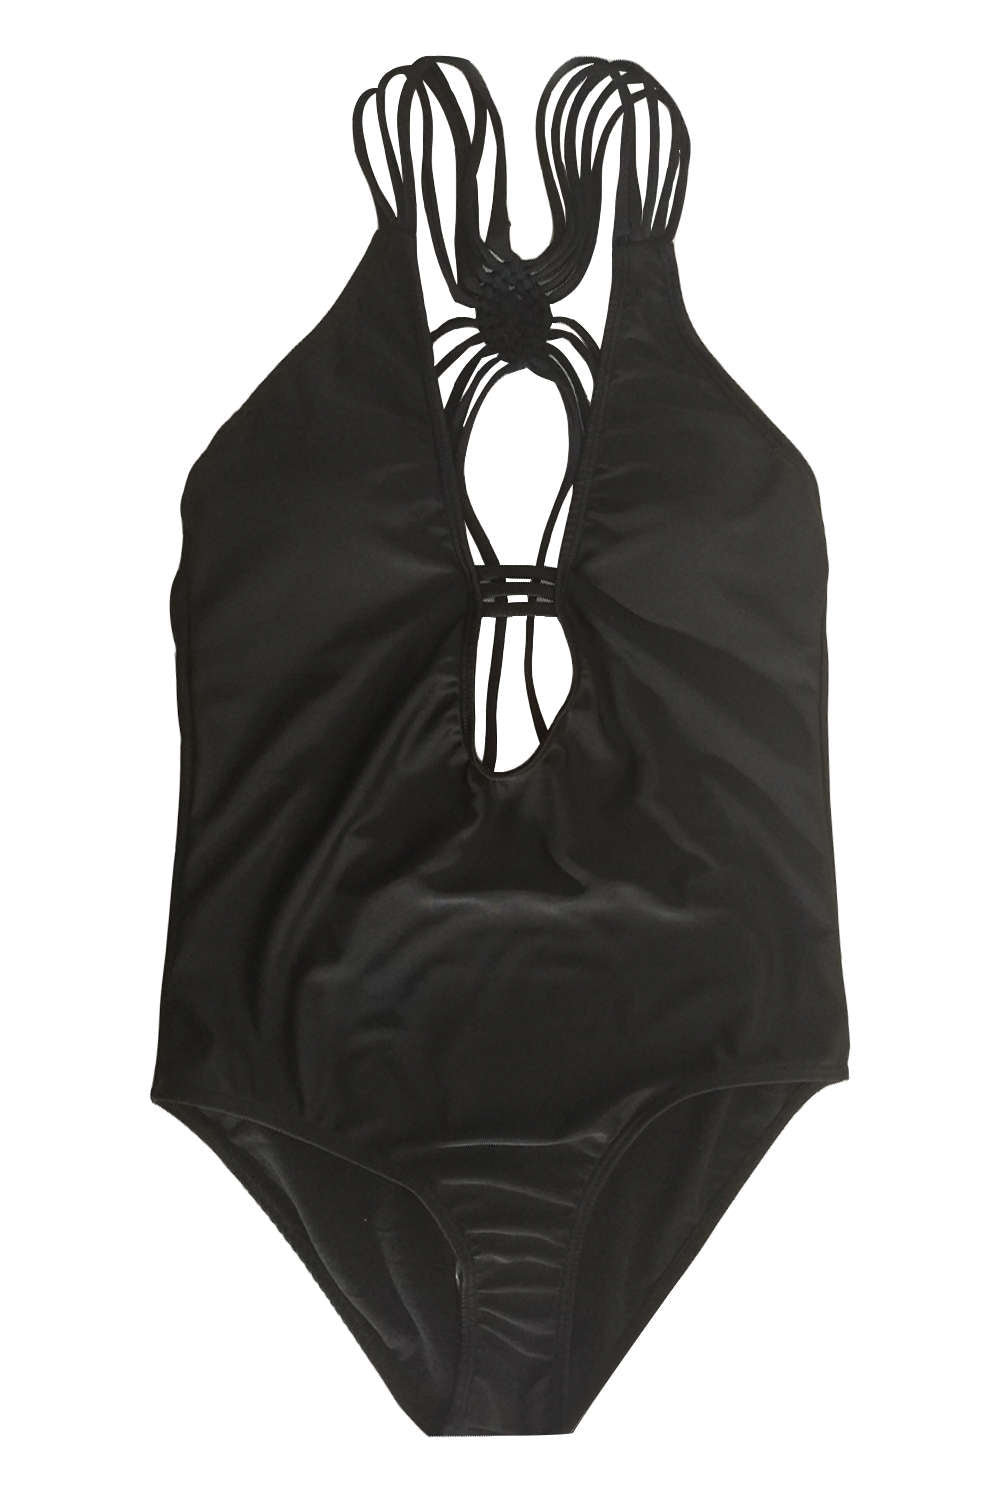 Iyasson Elegant Black Deep V-neckline One-piece Swimsuit With Handmade Braided Ties